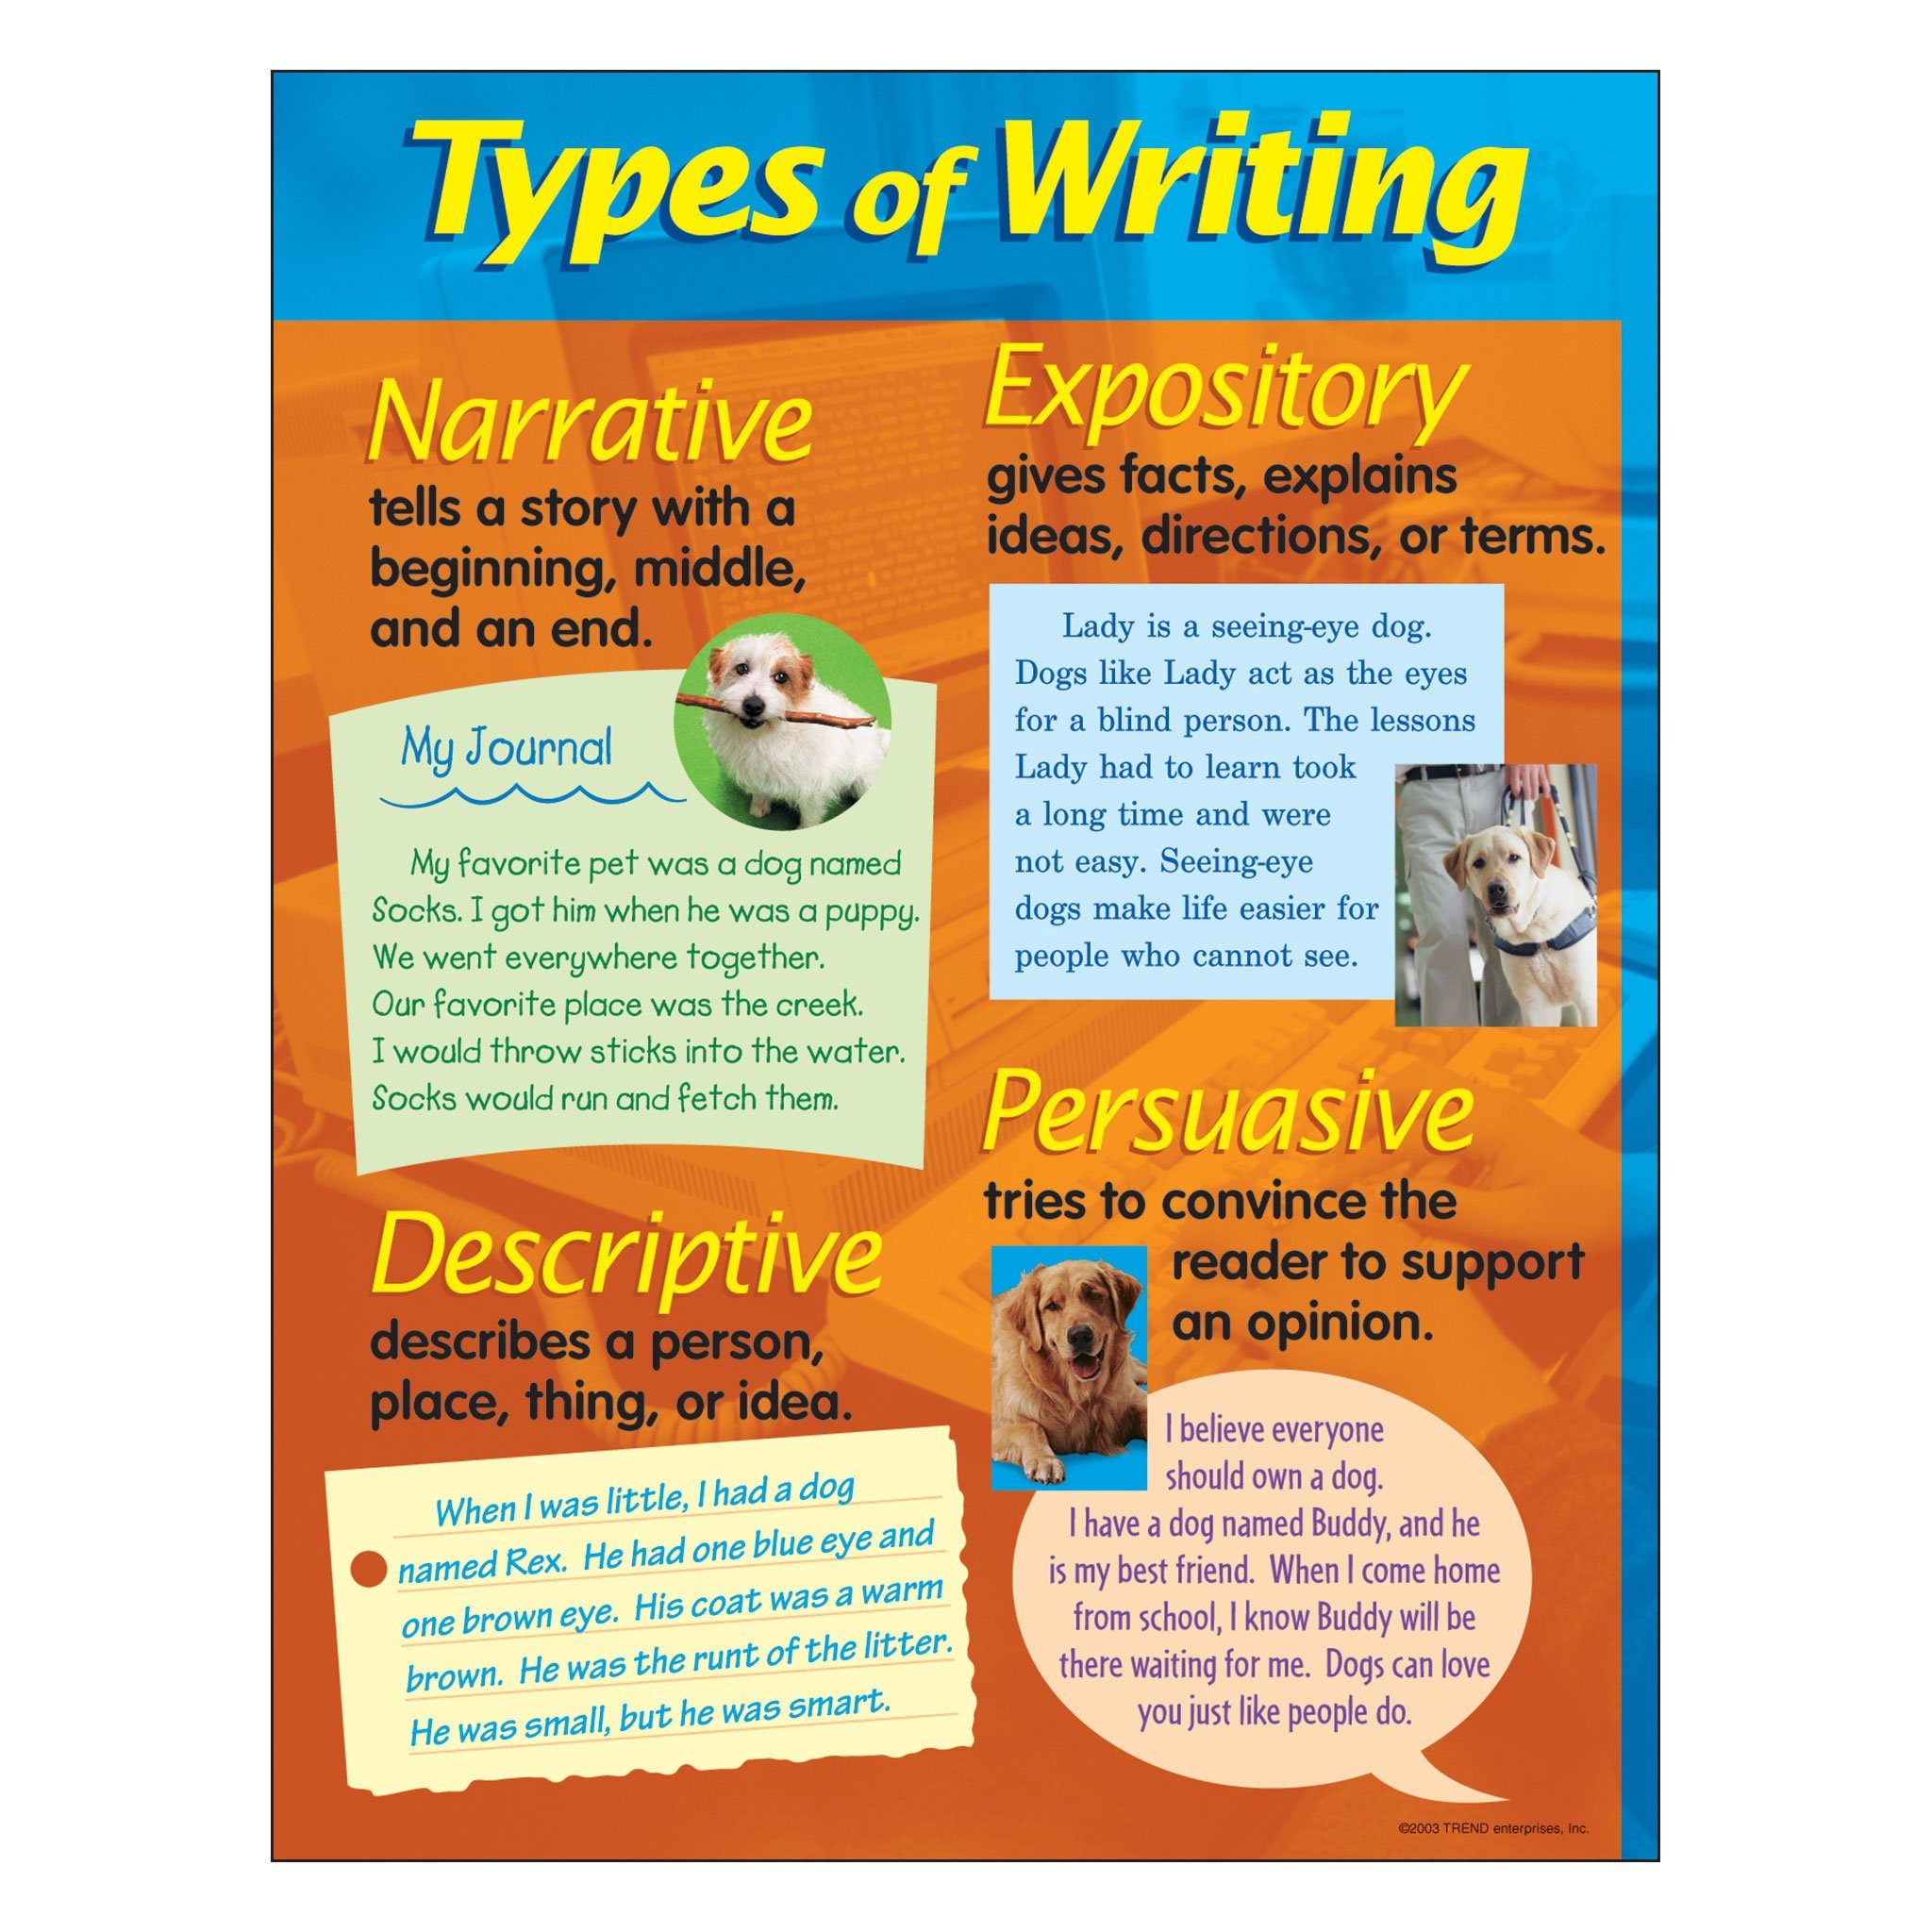 types of writing presentation